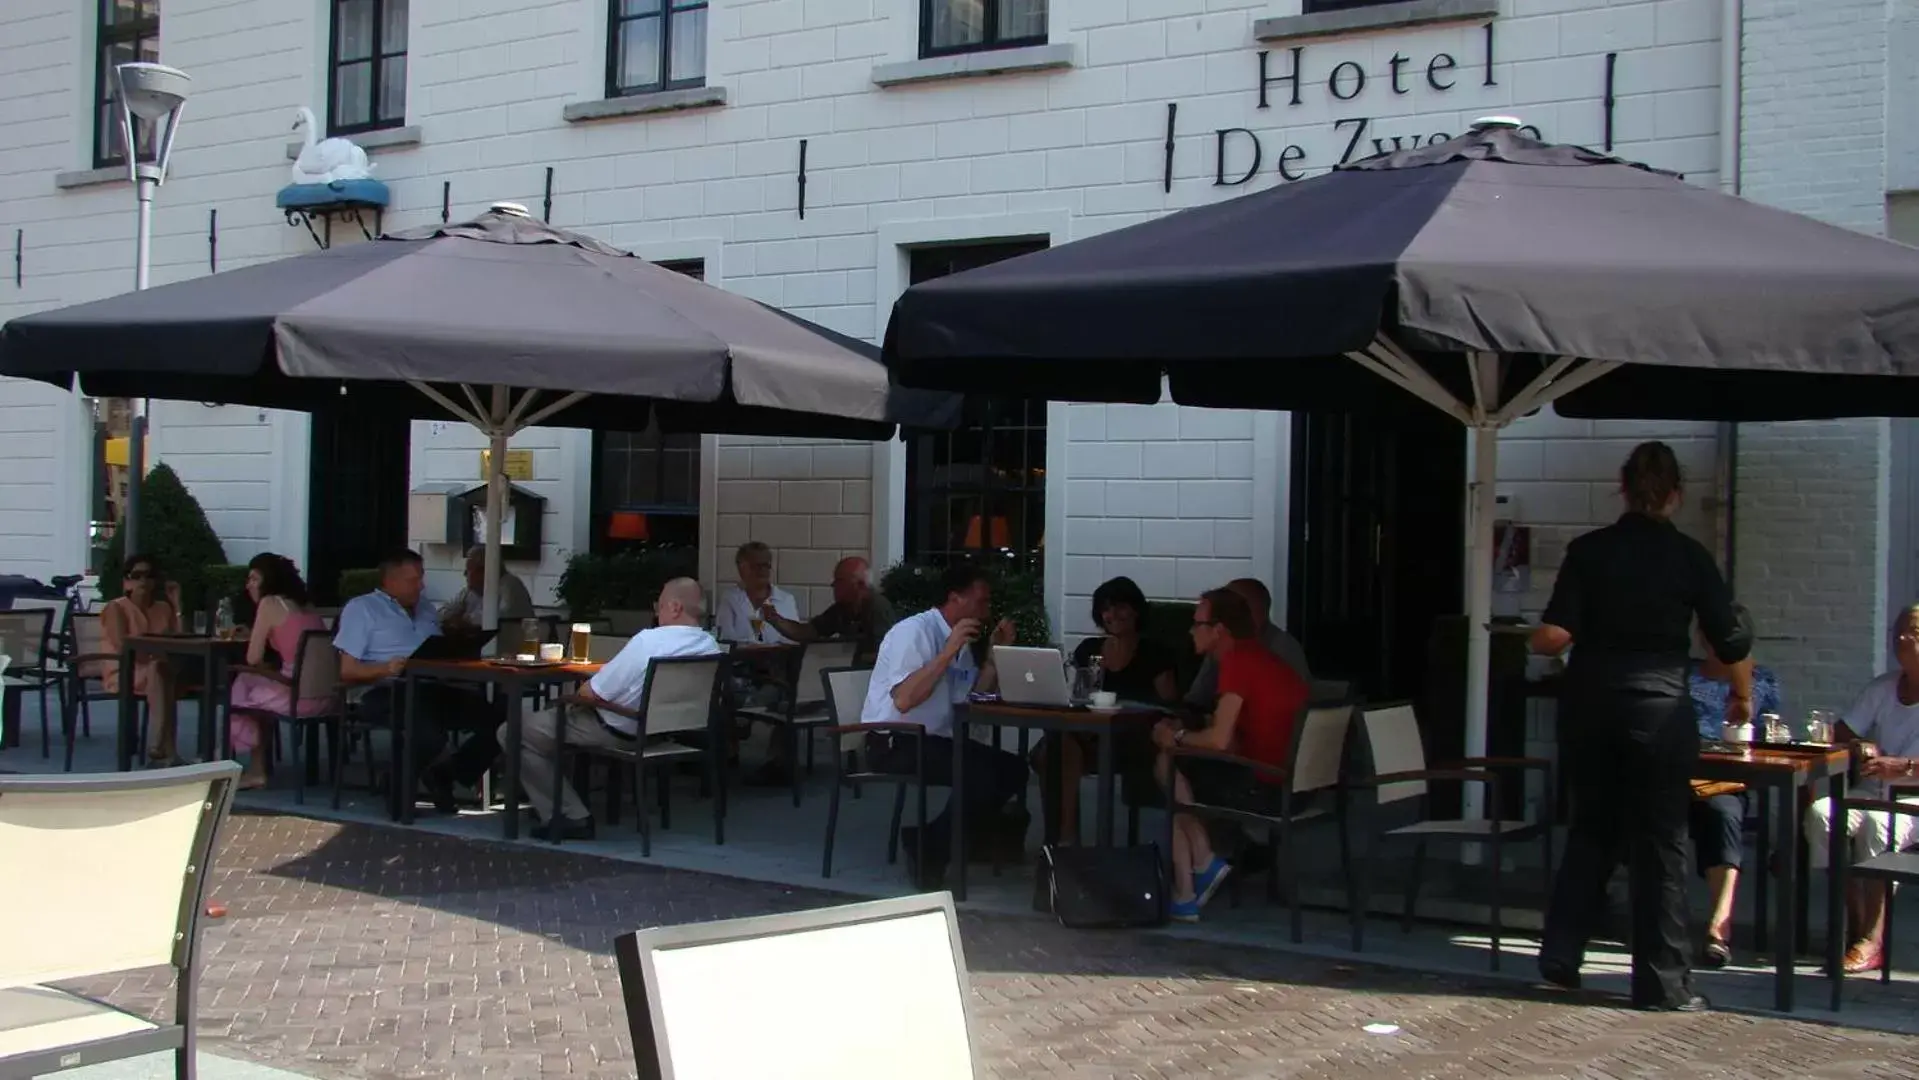 Balcony/Terrace, Restaurant/Places to Eat in Hotel & Brasserie de Zwaan Venray